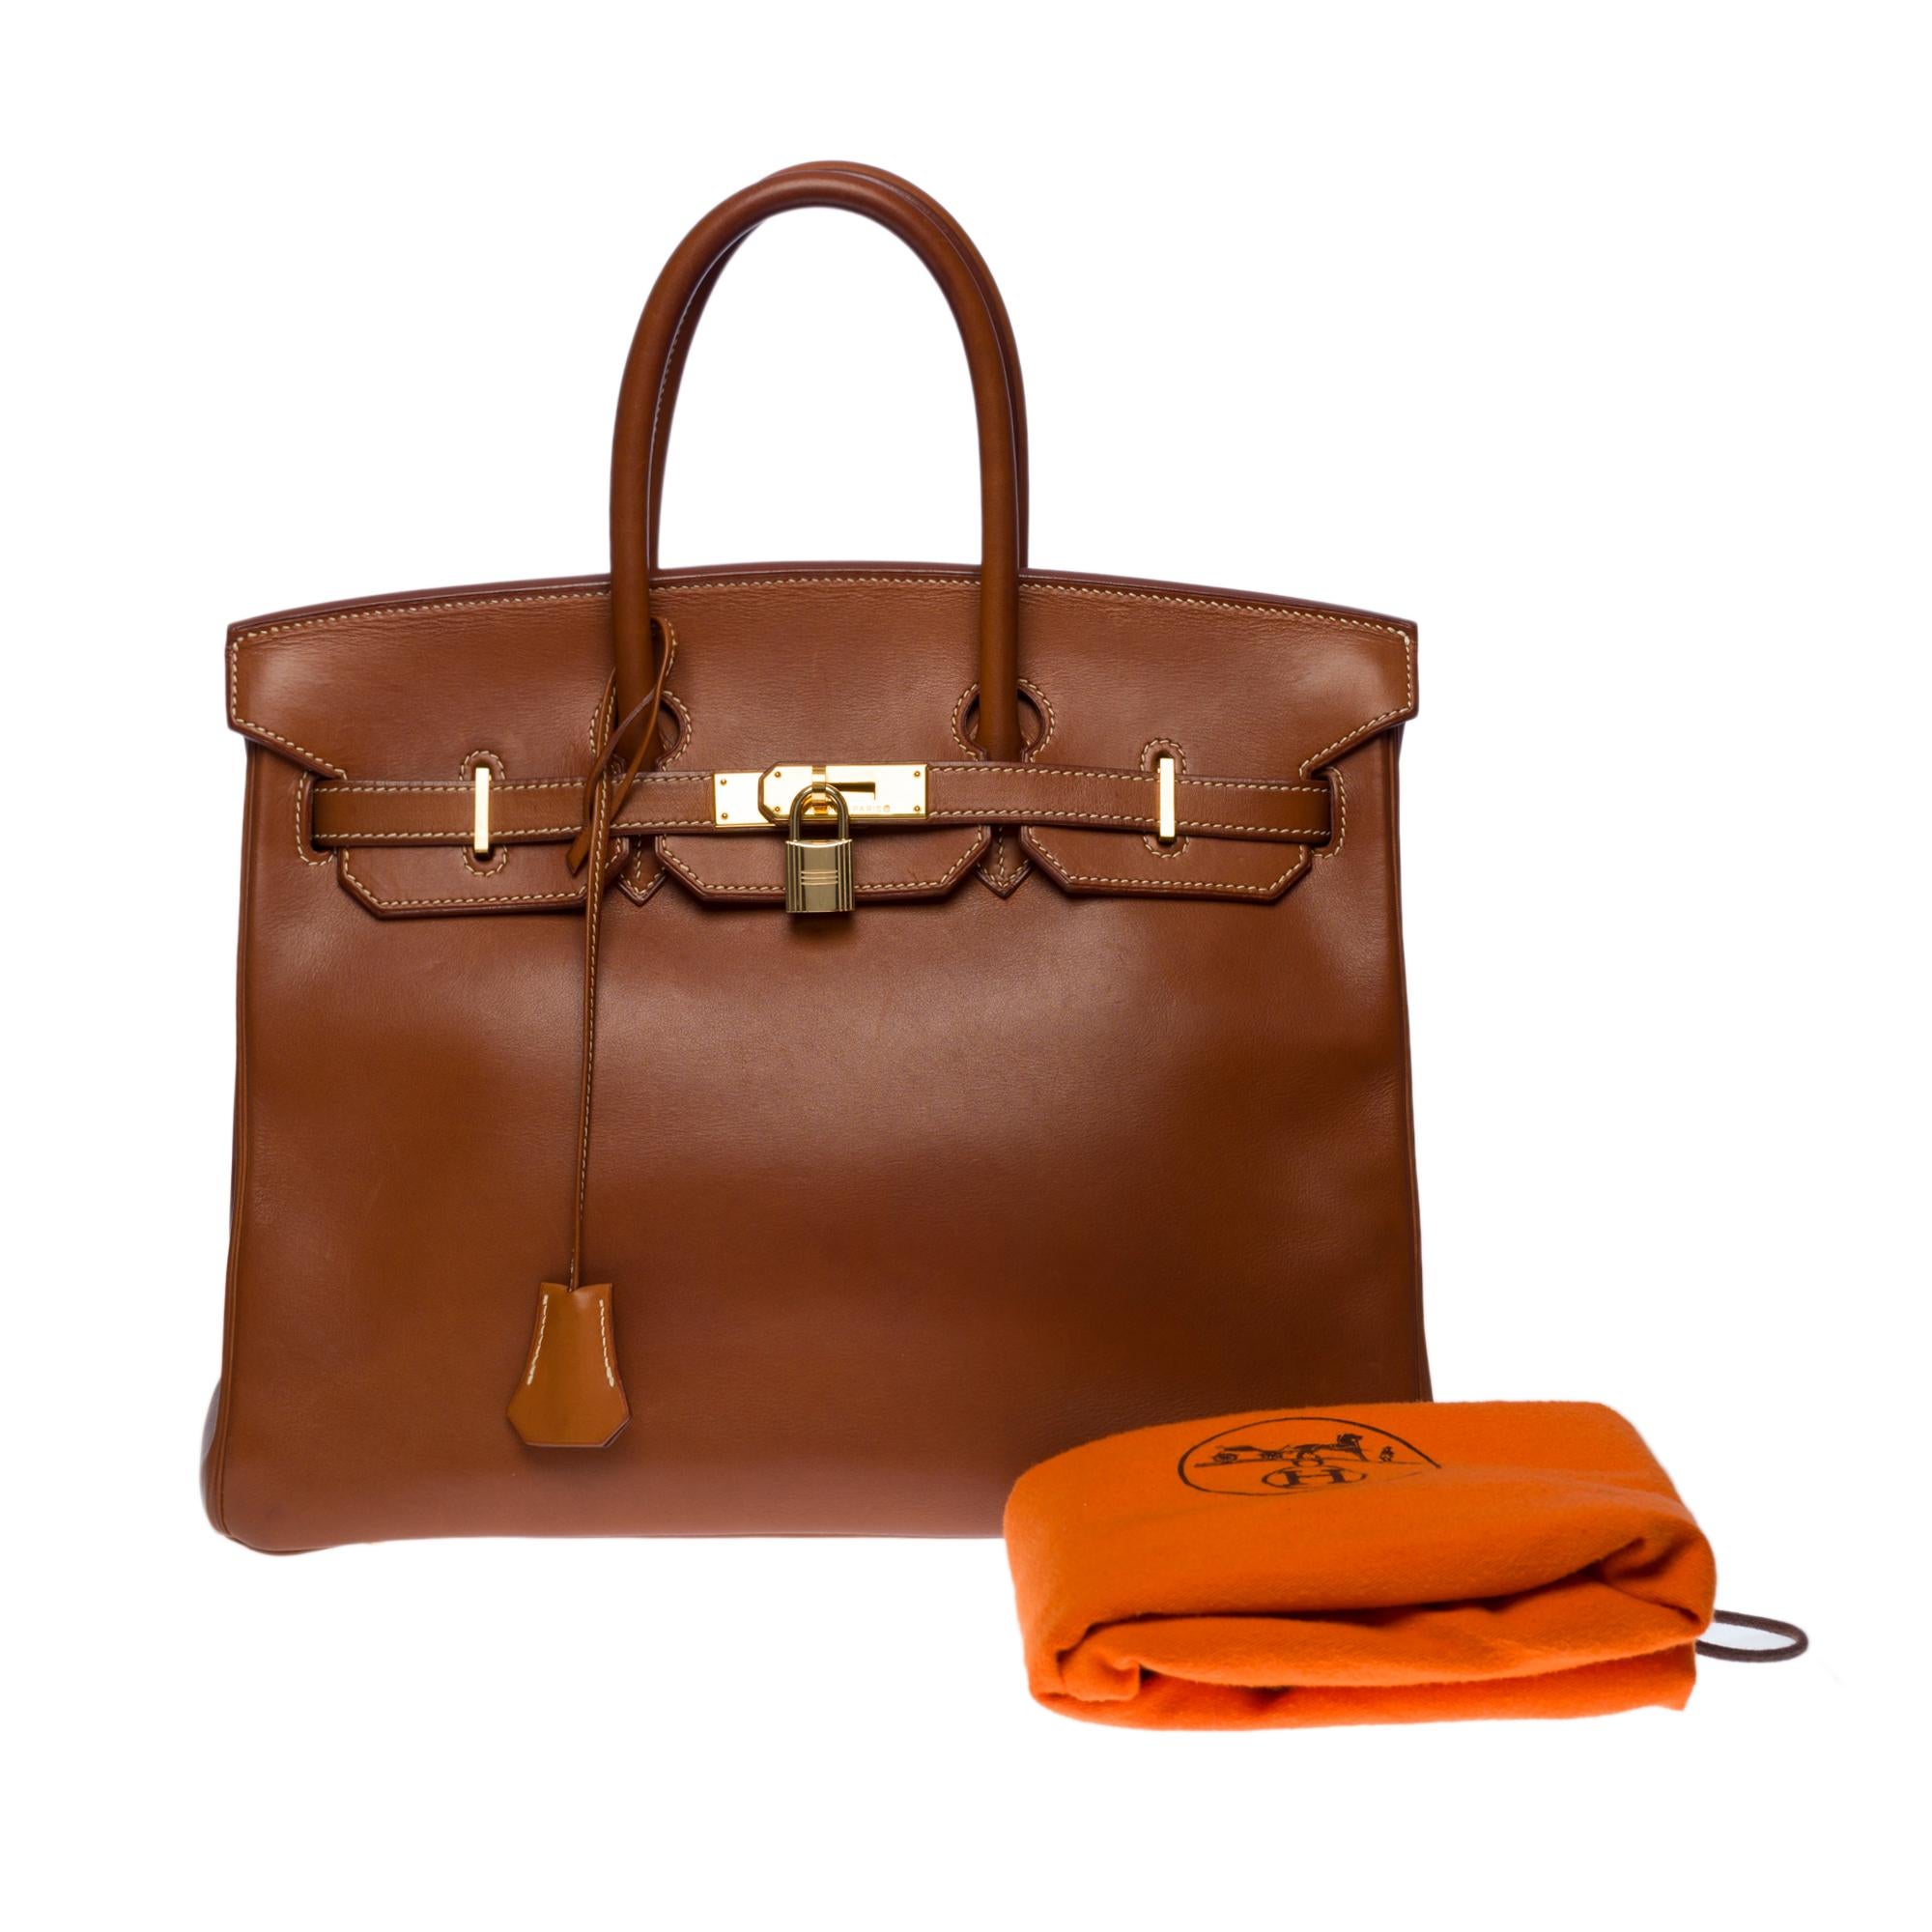 Rare & Exceptional Hermès Birkin 35 handbag in Gold Barenia leather, GHW 3